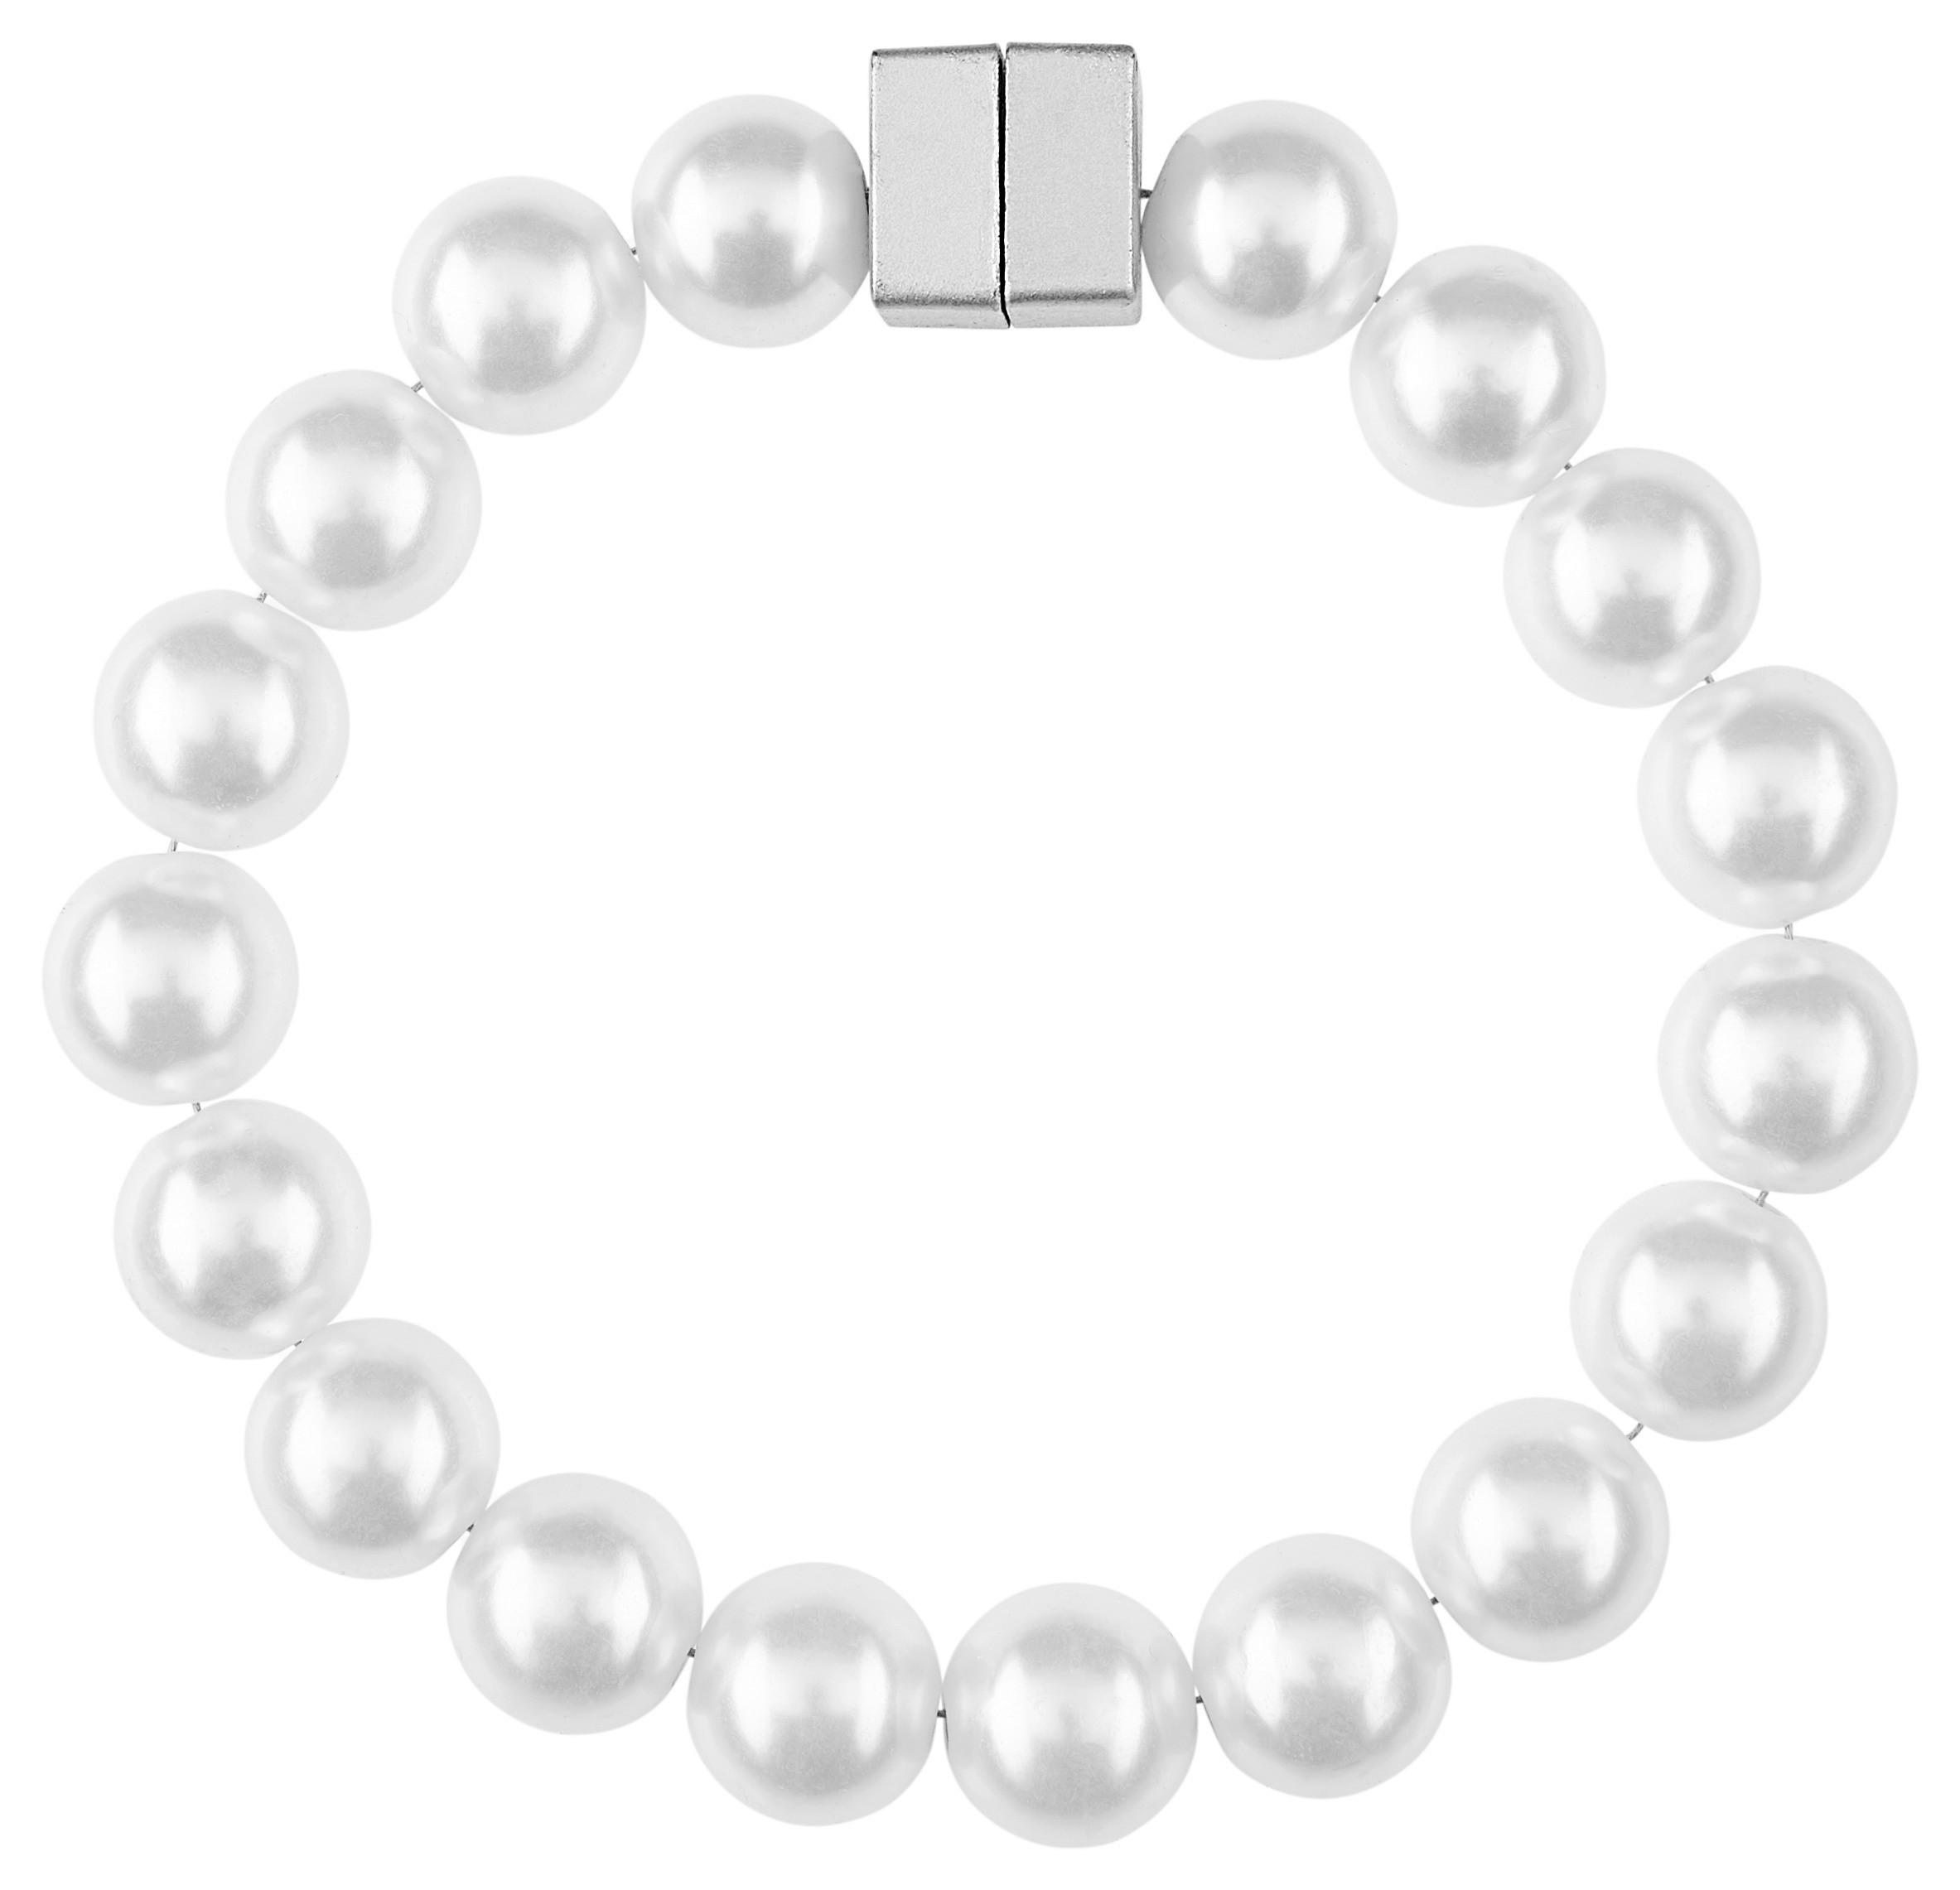 Raffhalter Perlenkette in Weiß - Weiß, ROMANTIK / LANDHAUS, Kunststoff/Metall (29cm) - Modern Living